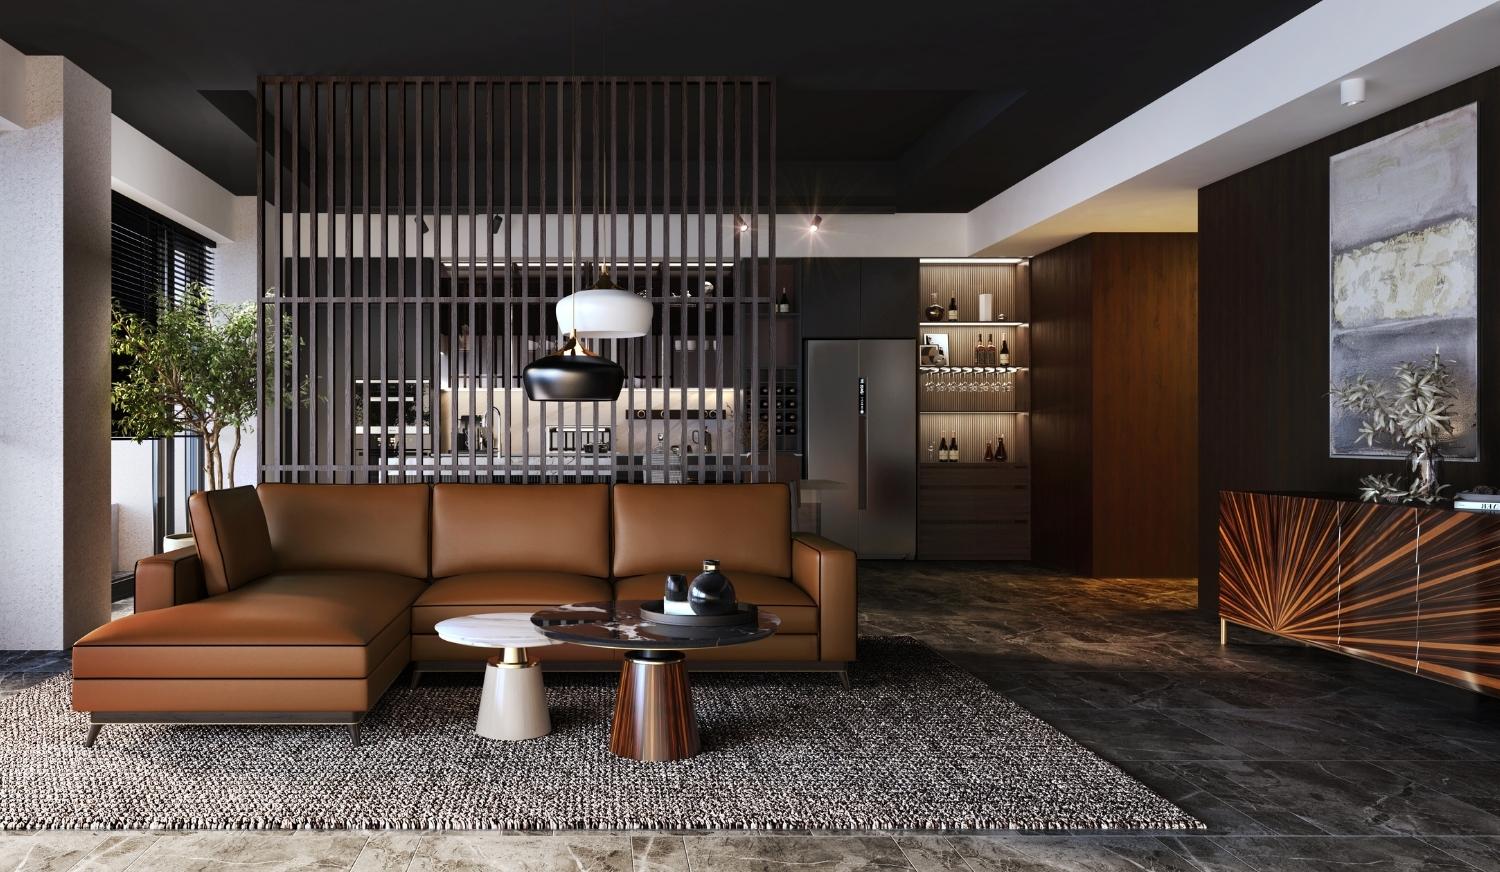 KOEN Sectional Sofa ERICO Coffee Table CUCCO Sideboard By Marano Furniture 1, Design Authority